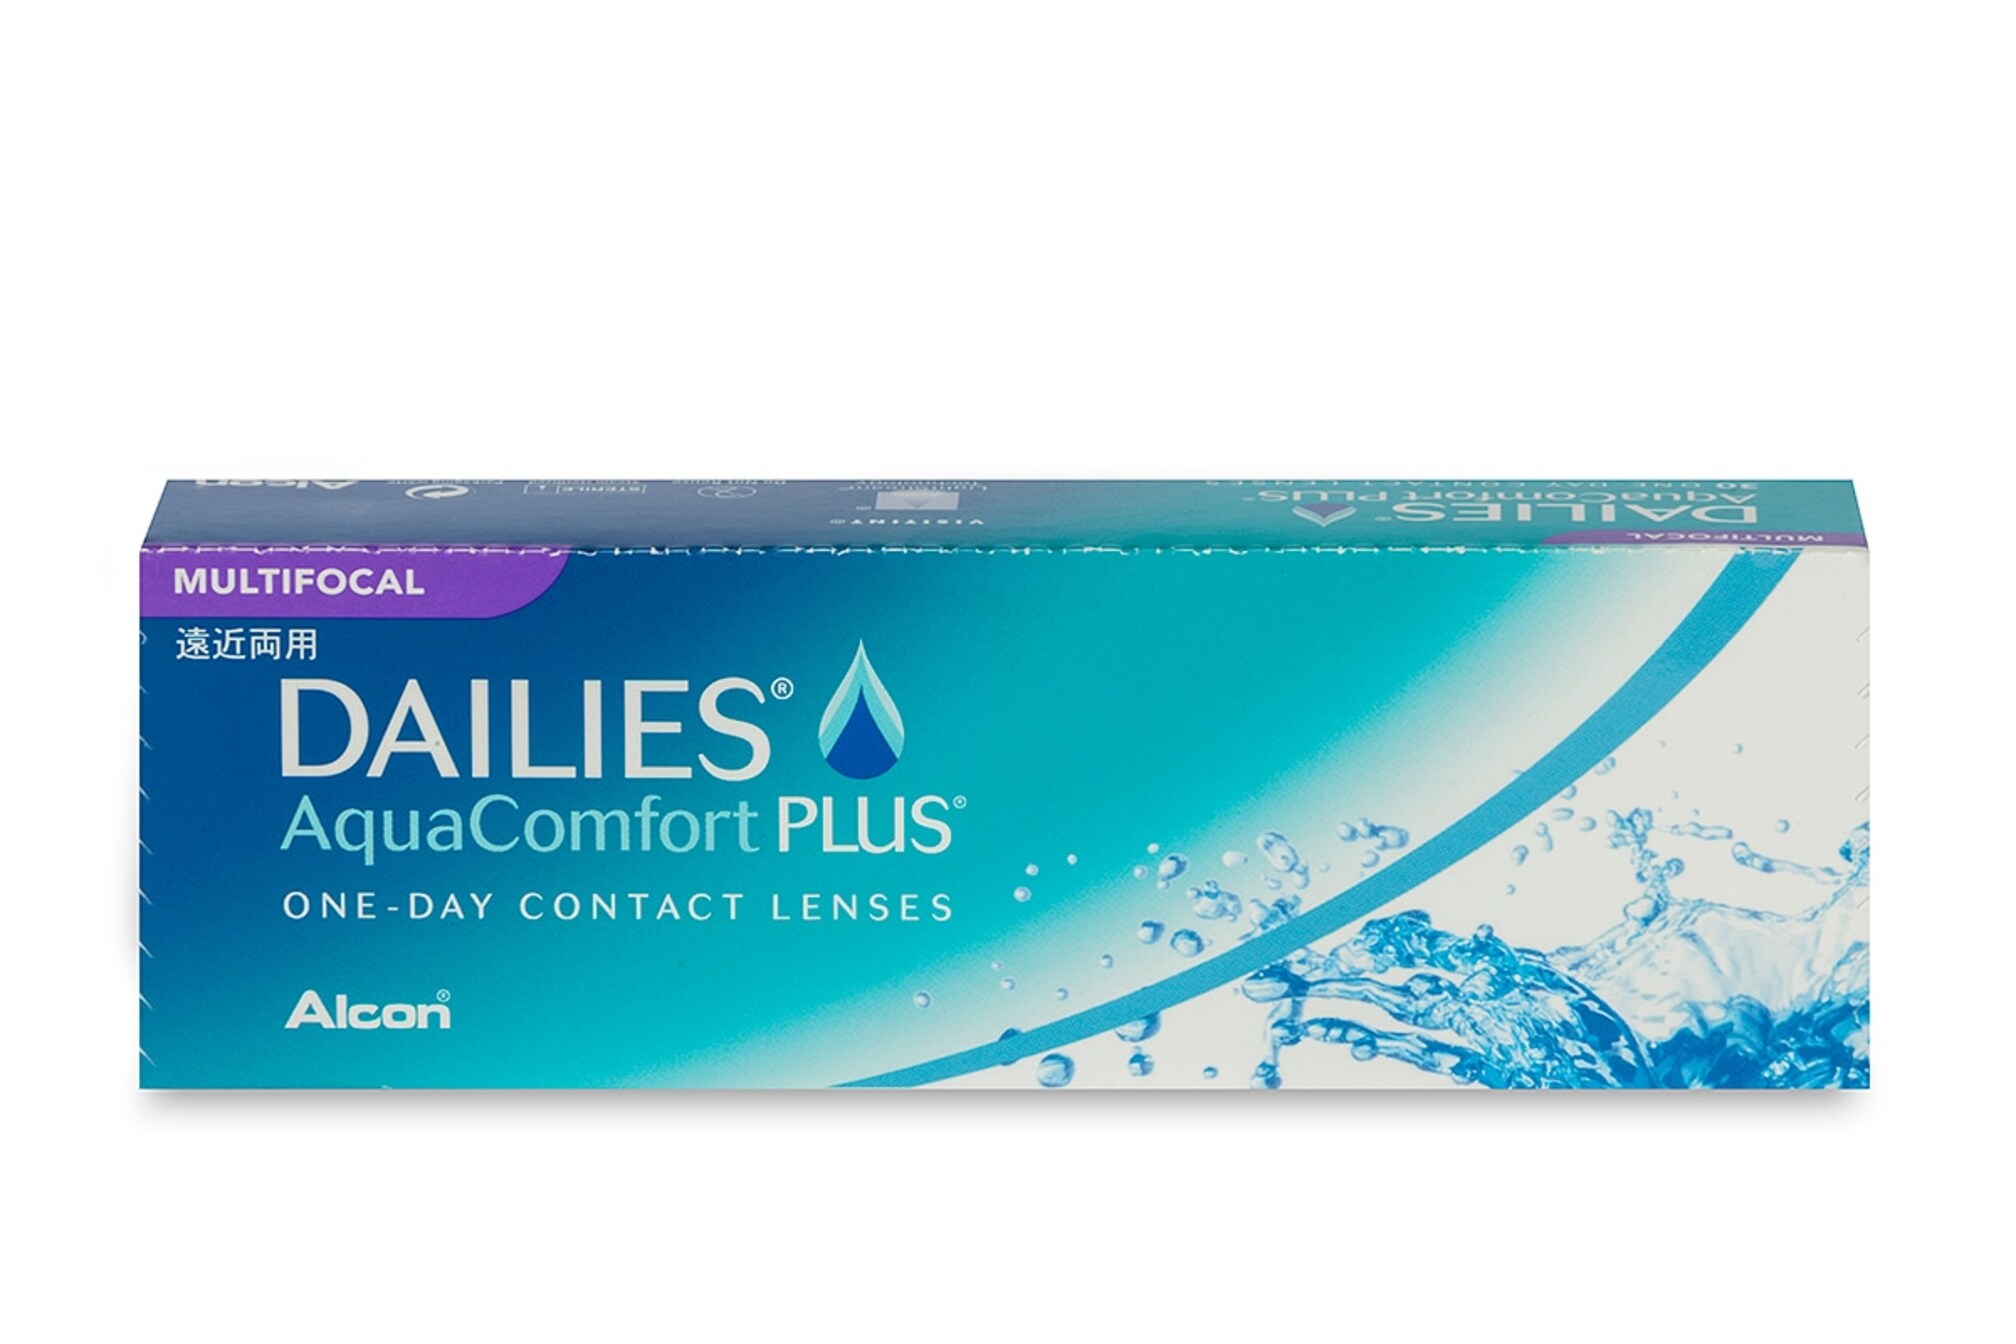 dailies-aquacomfort-plus-multifocal-bei-fielmann-kaufen